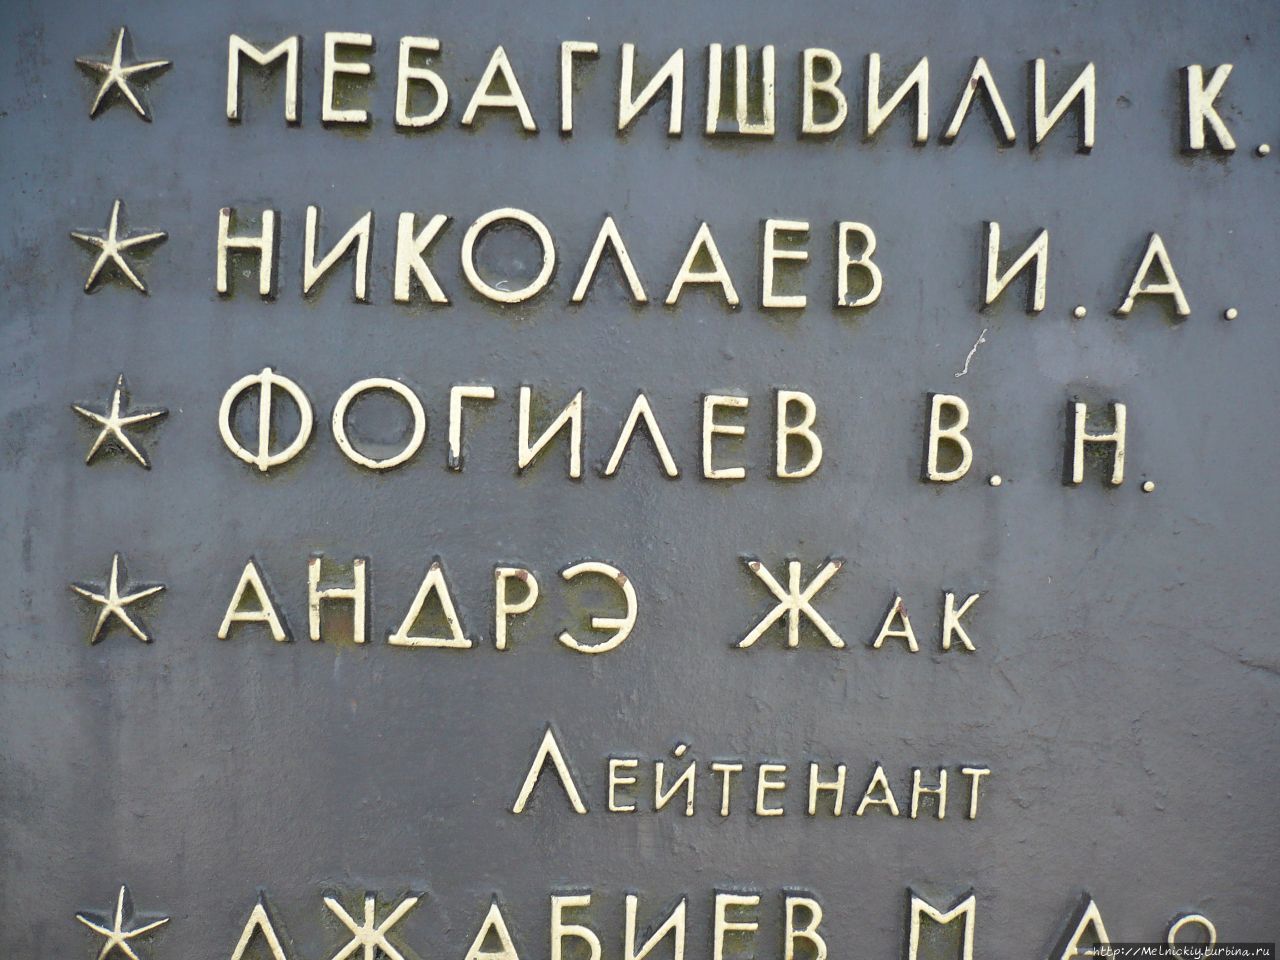 Мемориал героям штурма Кенигсберга Калининград, Россия